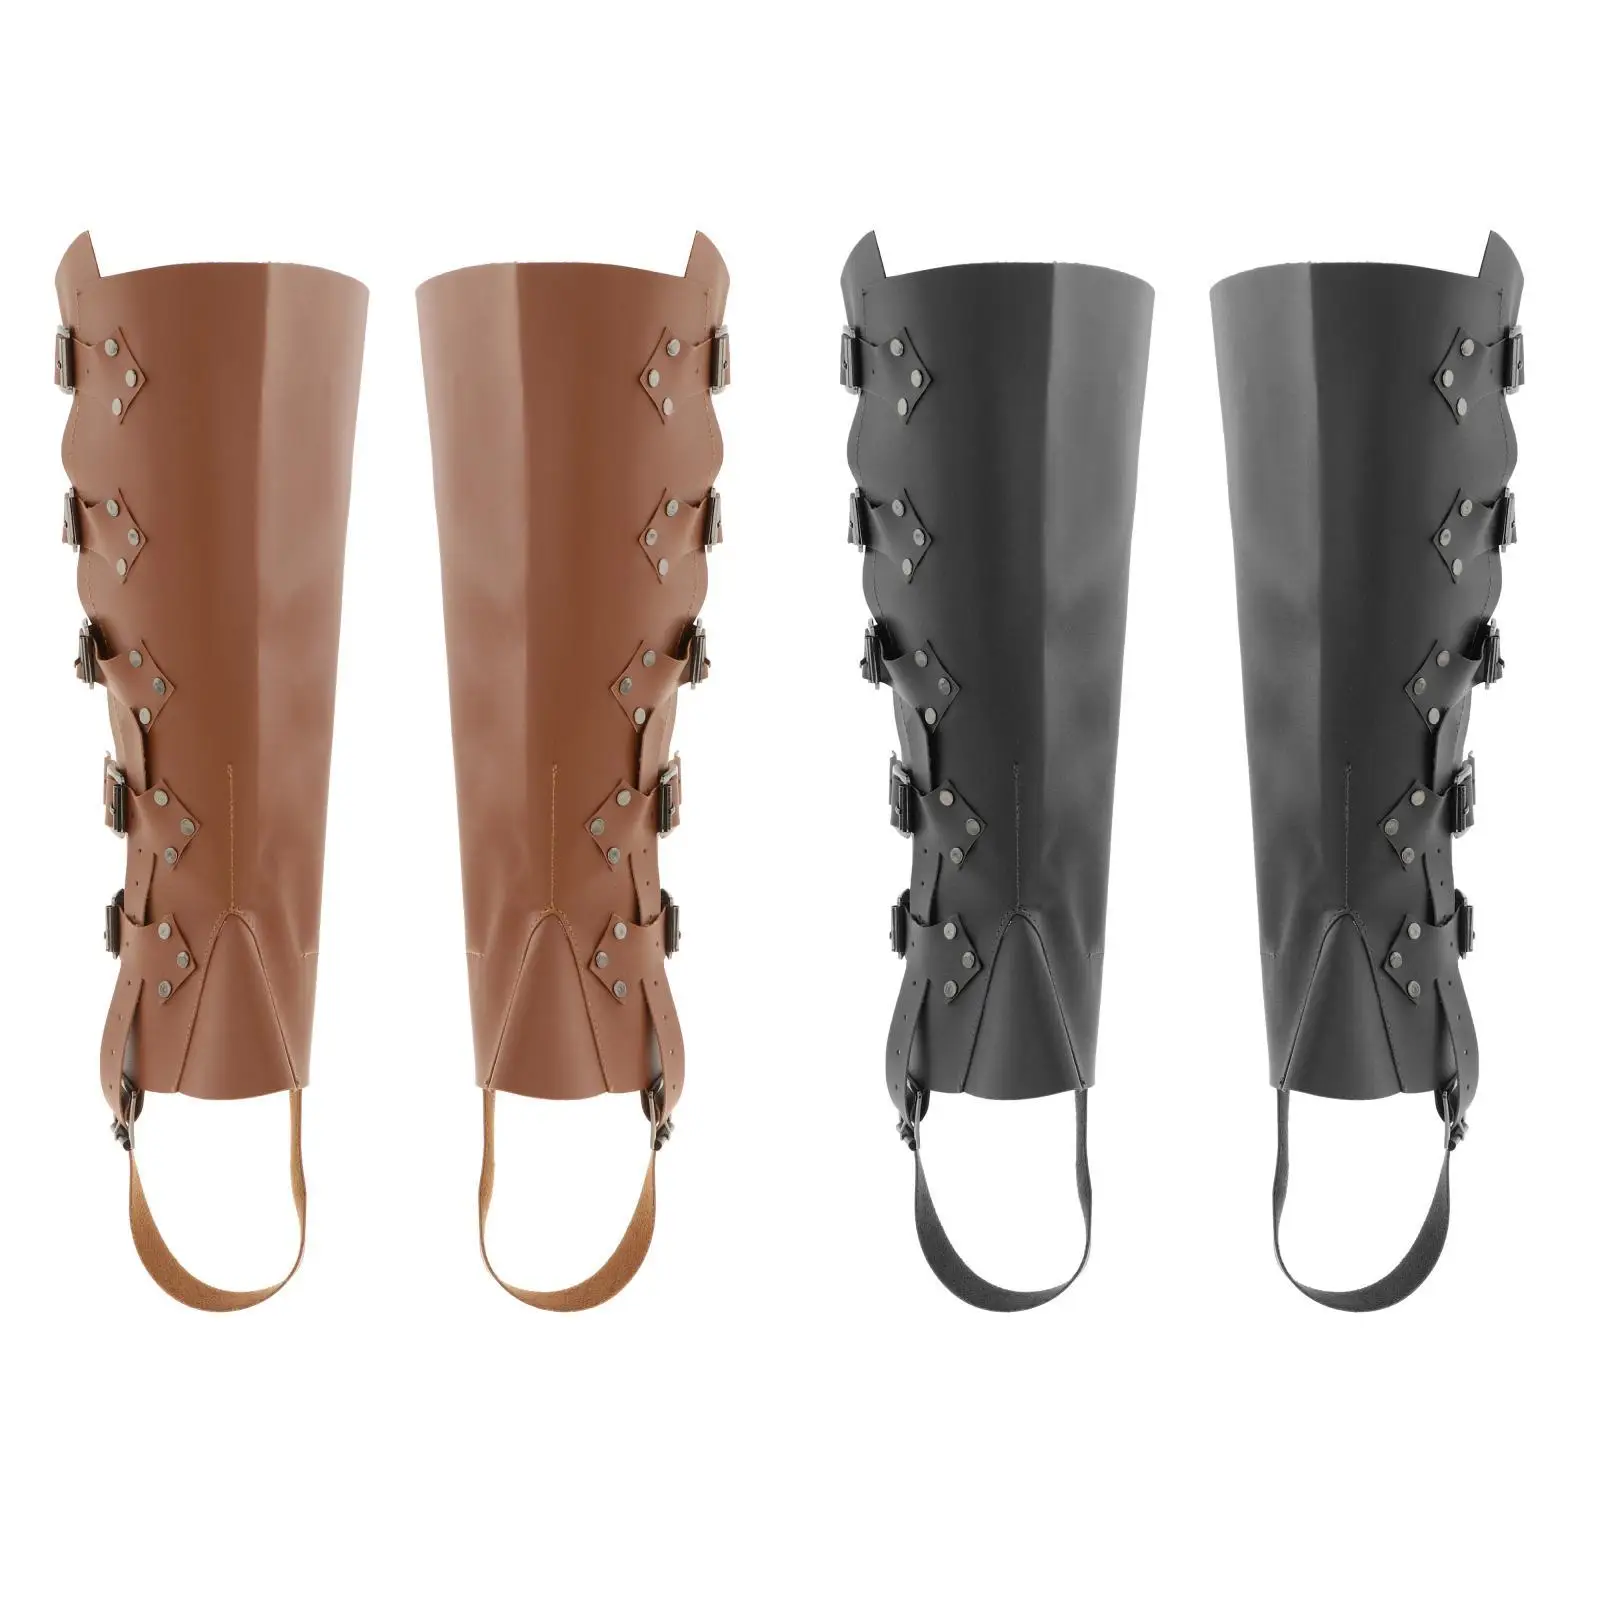 2x Adjustable Width Adjustable Black Leather   Wraps Rivet Medieval Medieval Lace up Buckle Shoes Cover for Hunting Hiking